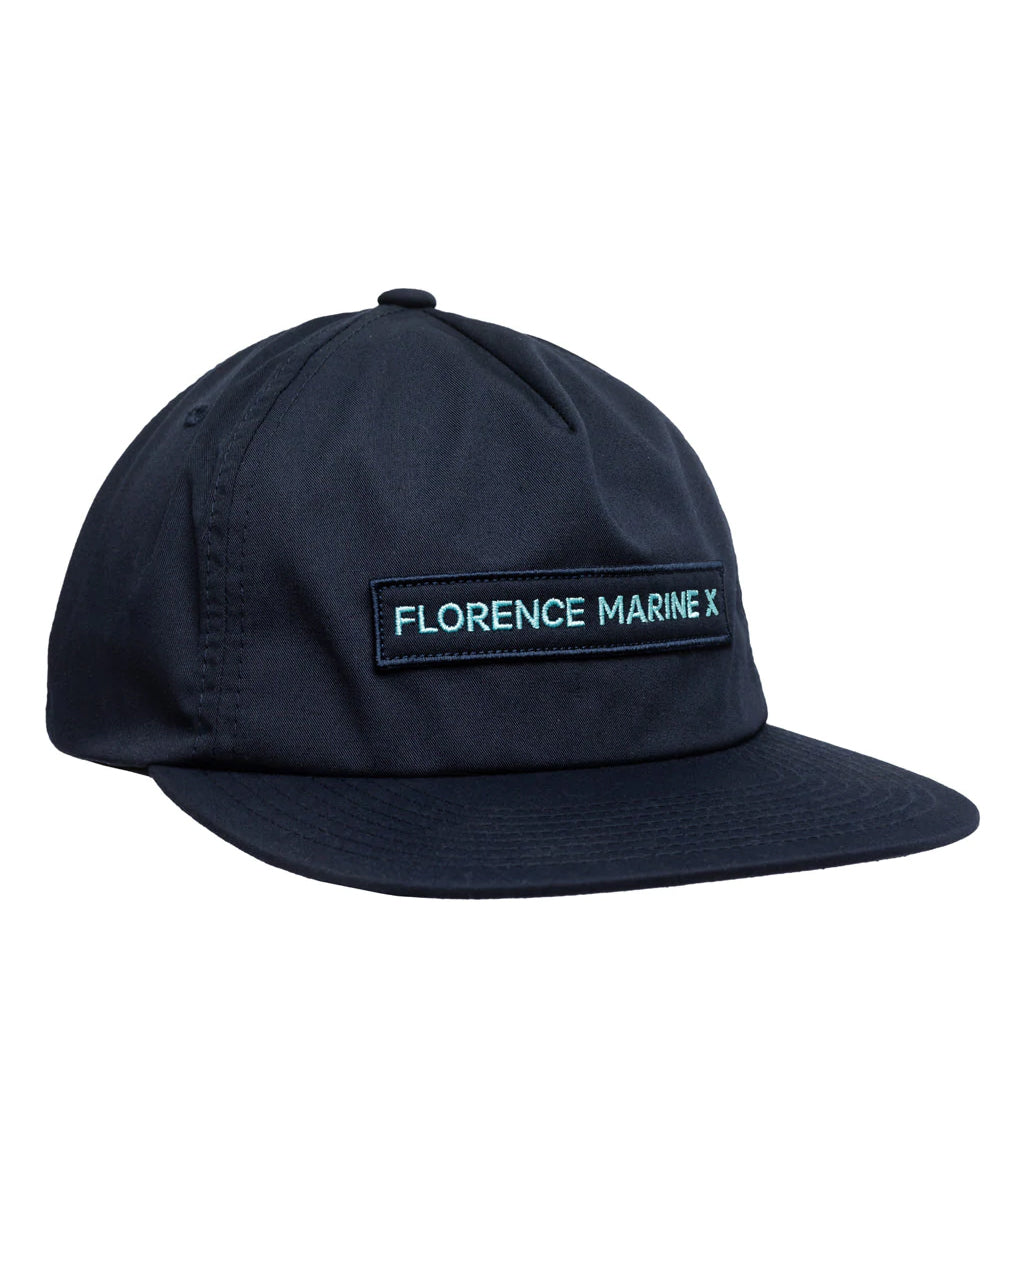 Florence Marine X Twill Hat Navy OS